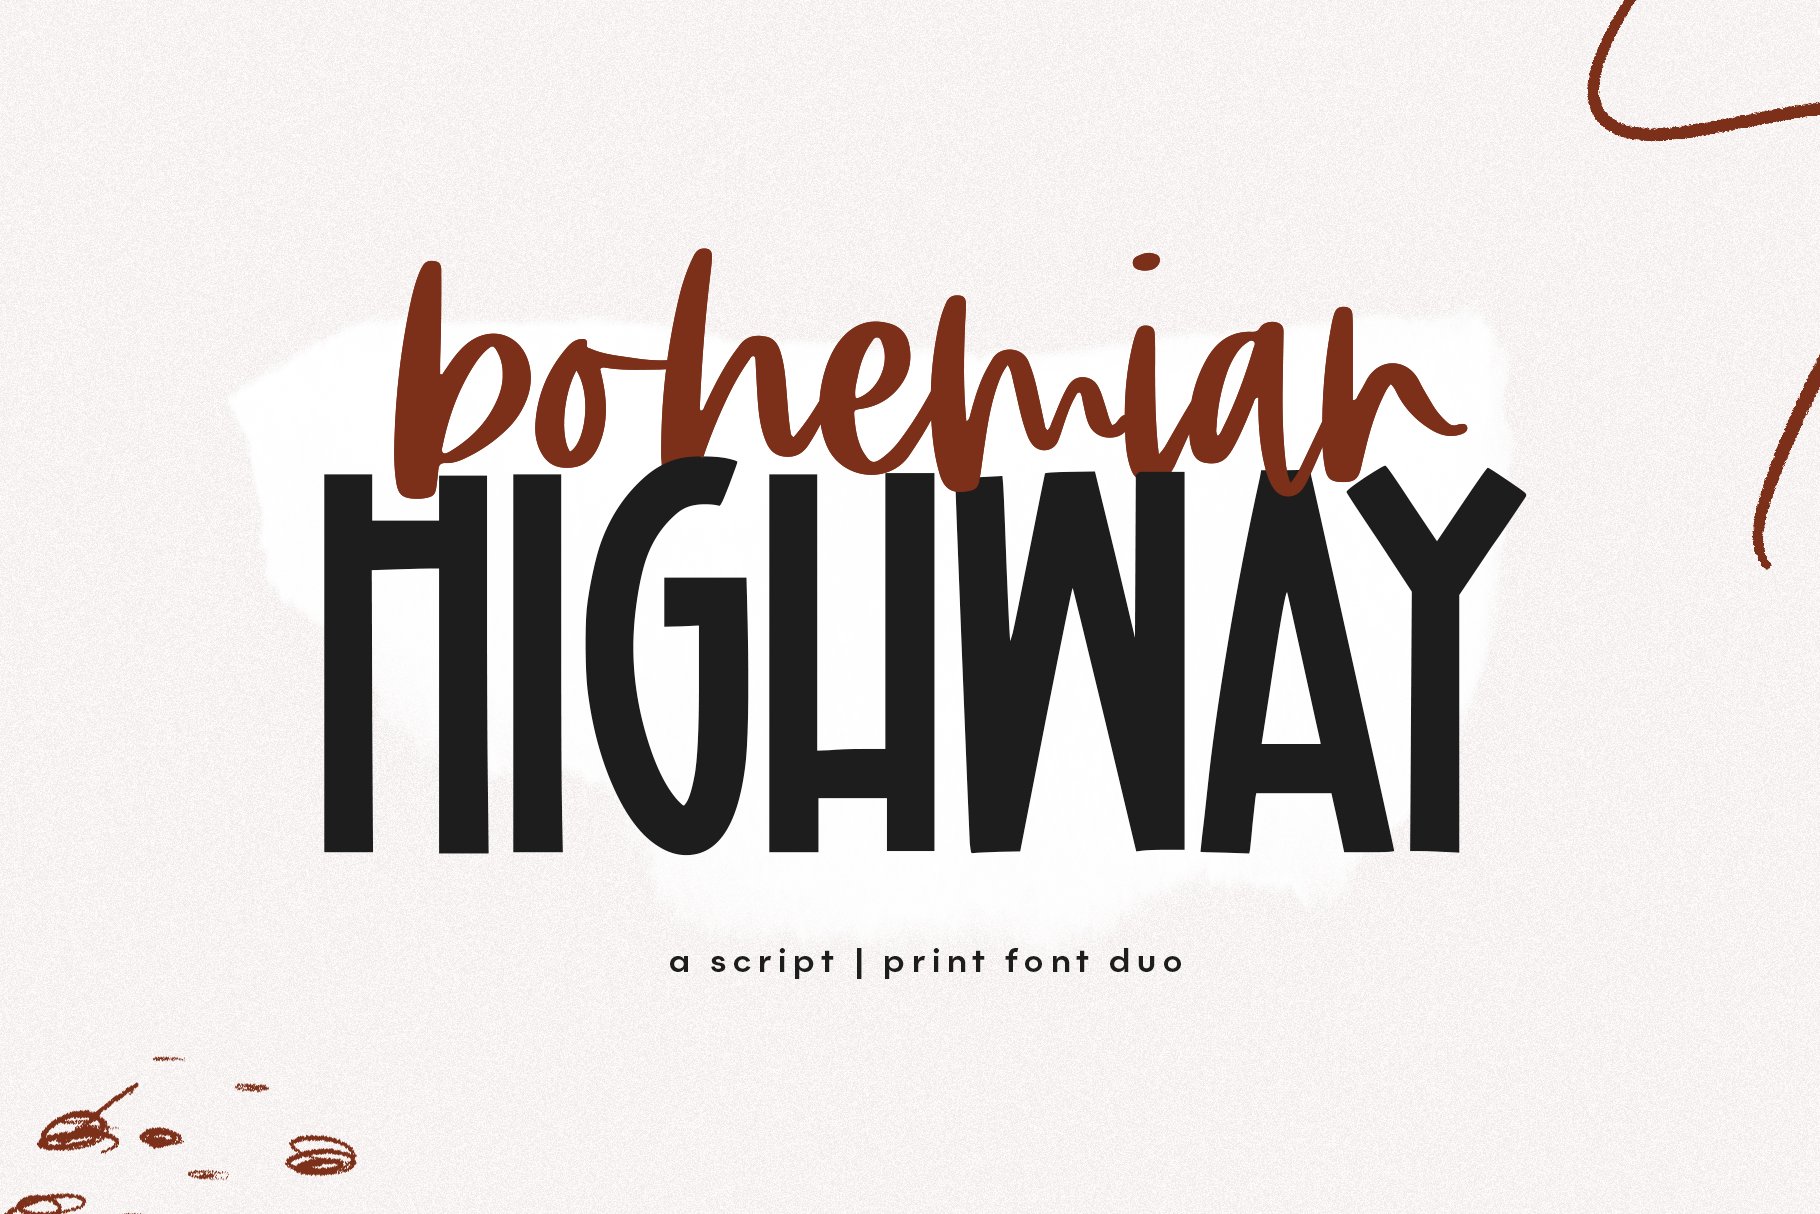 Bohemian Highway | Script Font Duo cover image.